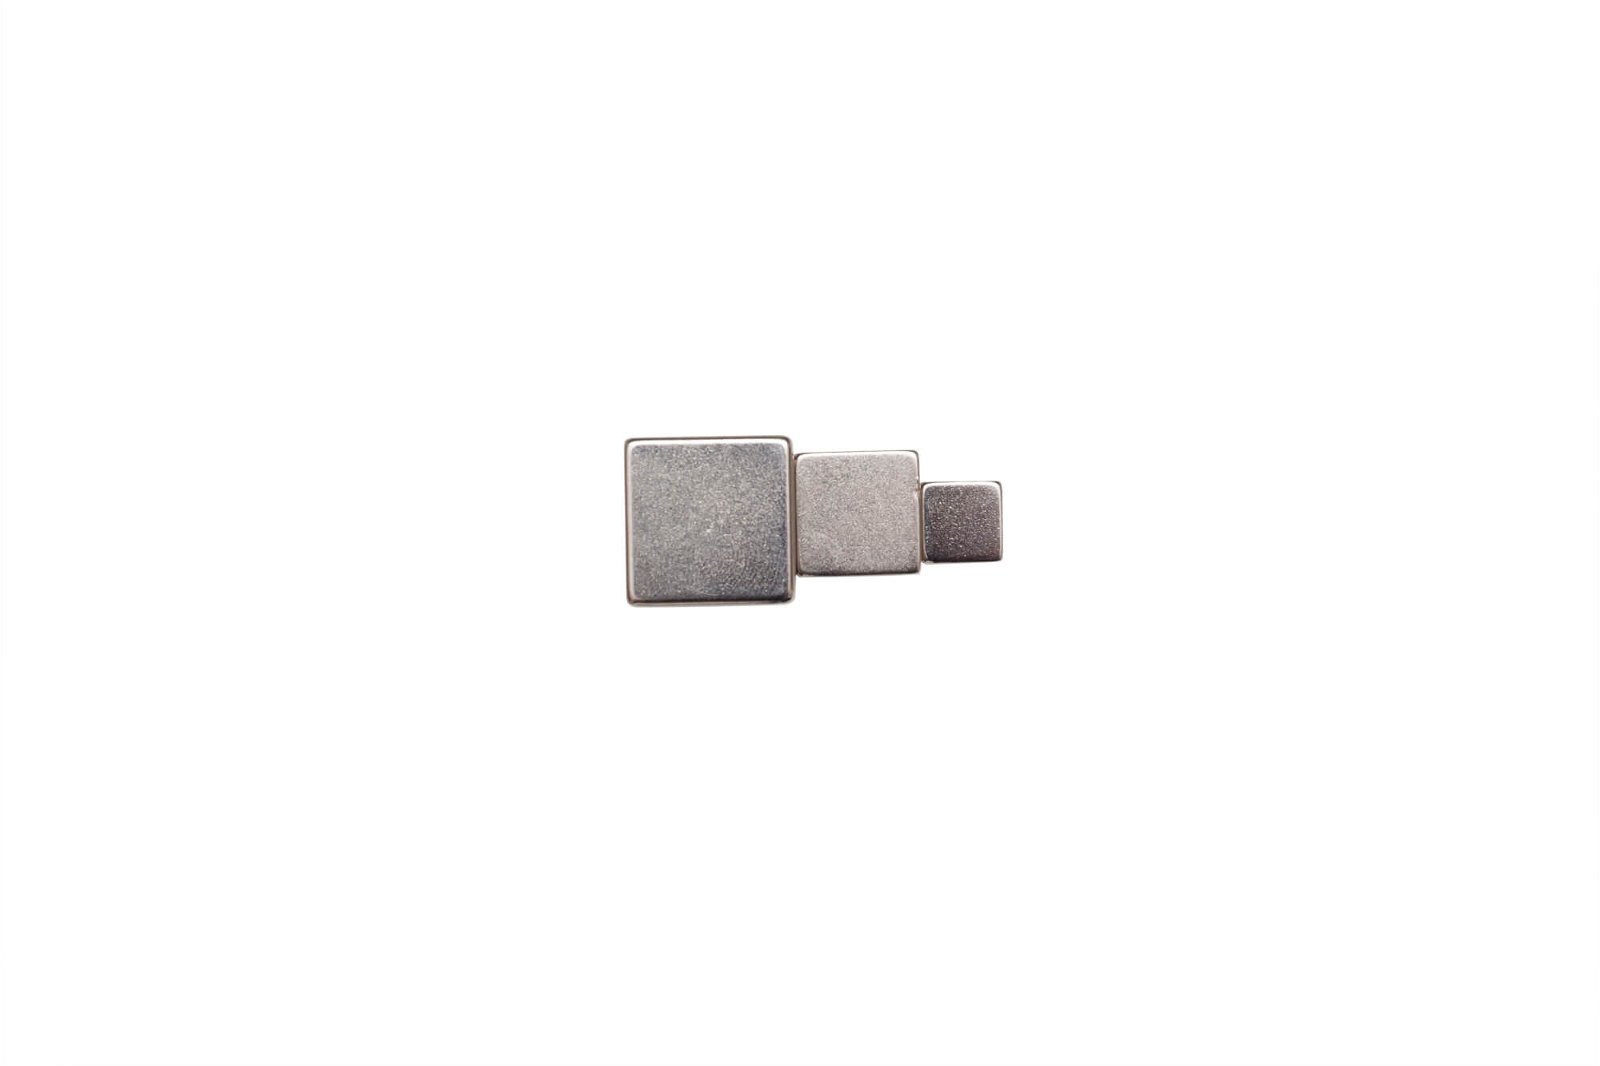 Neodym-Würfelmagnet, 10x10x10 mm 3,8 kg Haftkraft, 4 St./Set, hellsilber